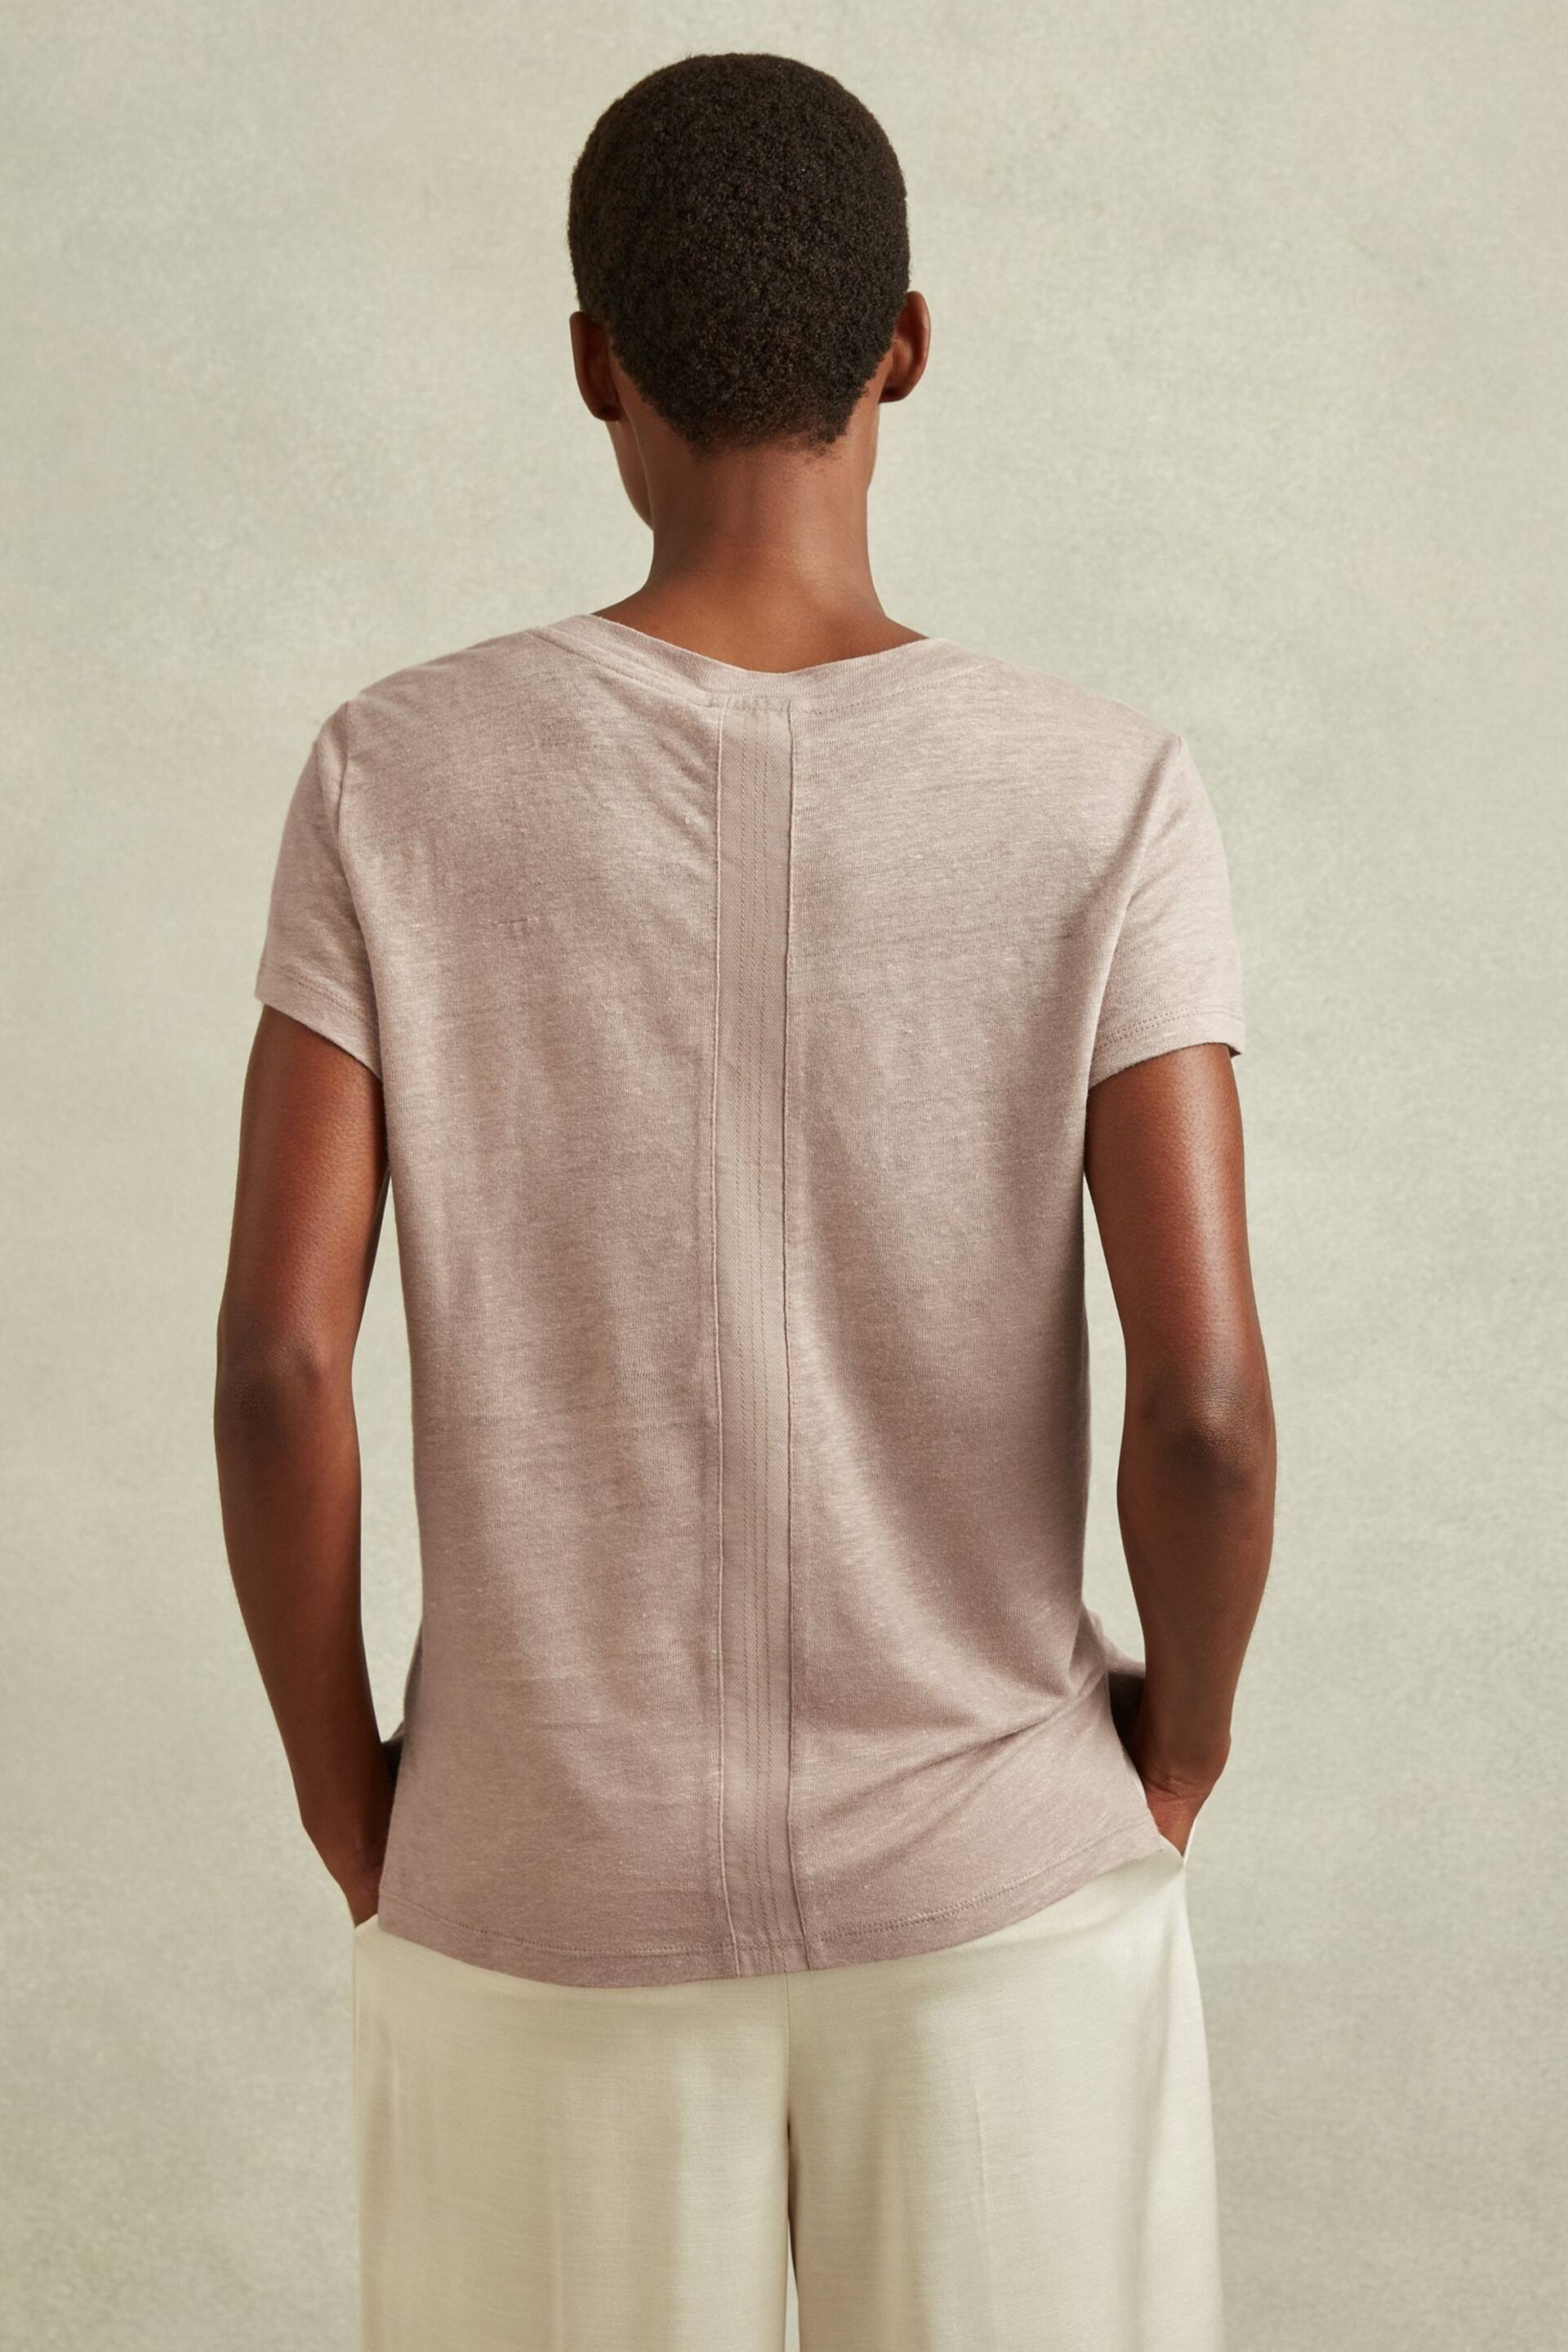 Reiss Mink Lottie Marled Linen V-Neck T-Shirt - Image 3 of 6